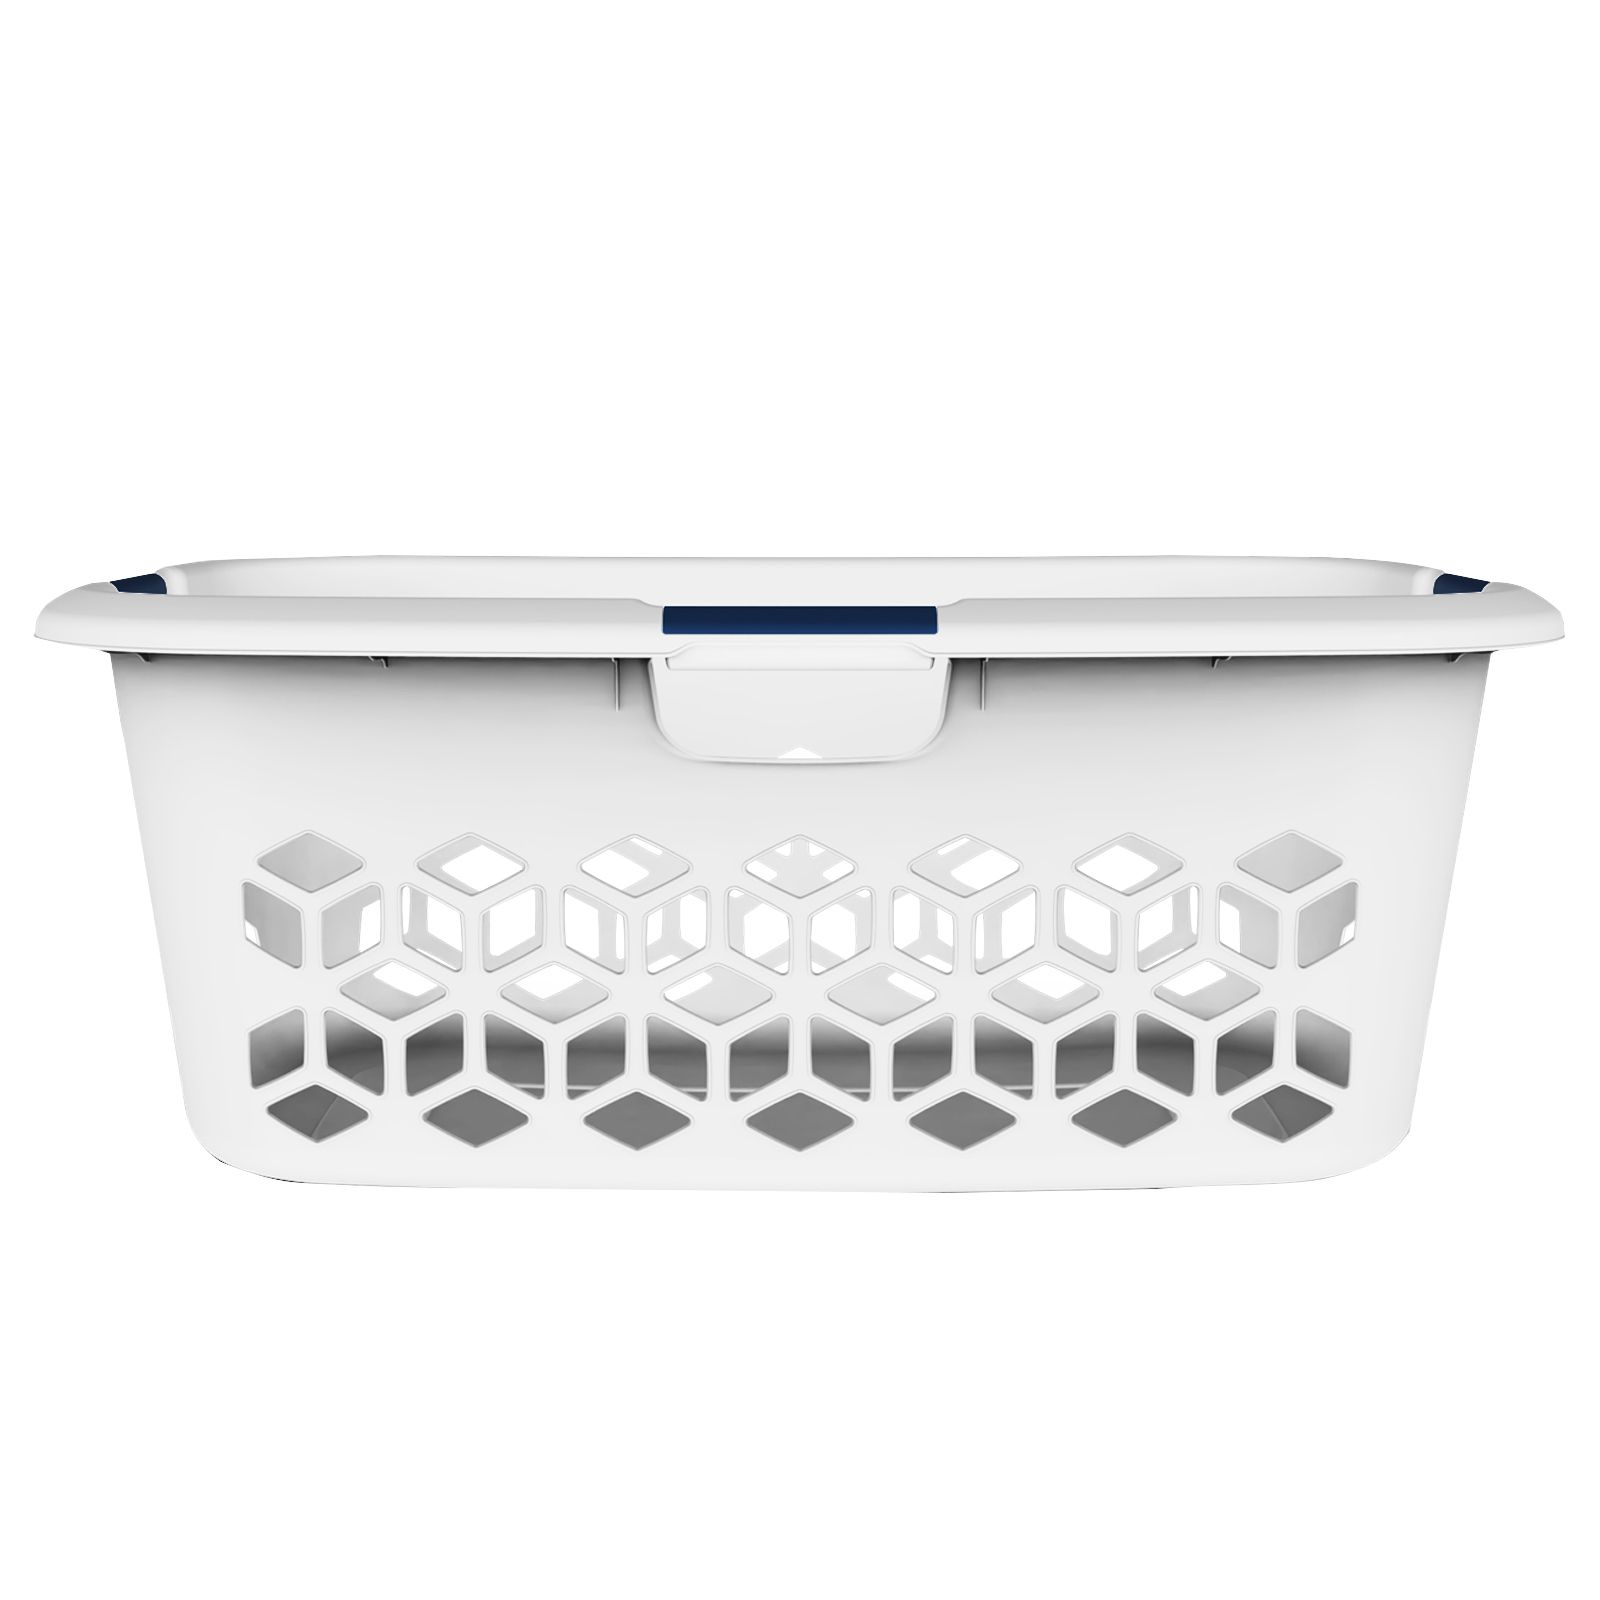 Organize-it 18.5-Gallon Body Contour Laundry Basket, 2 pk. - White